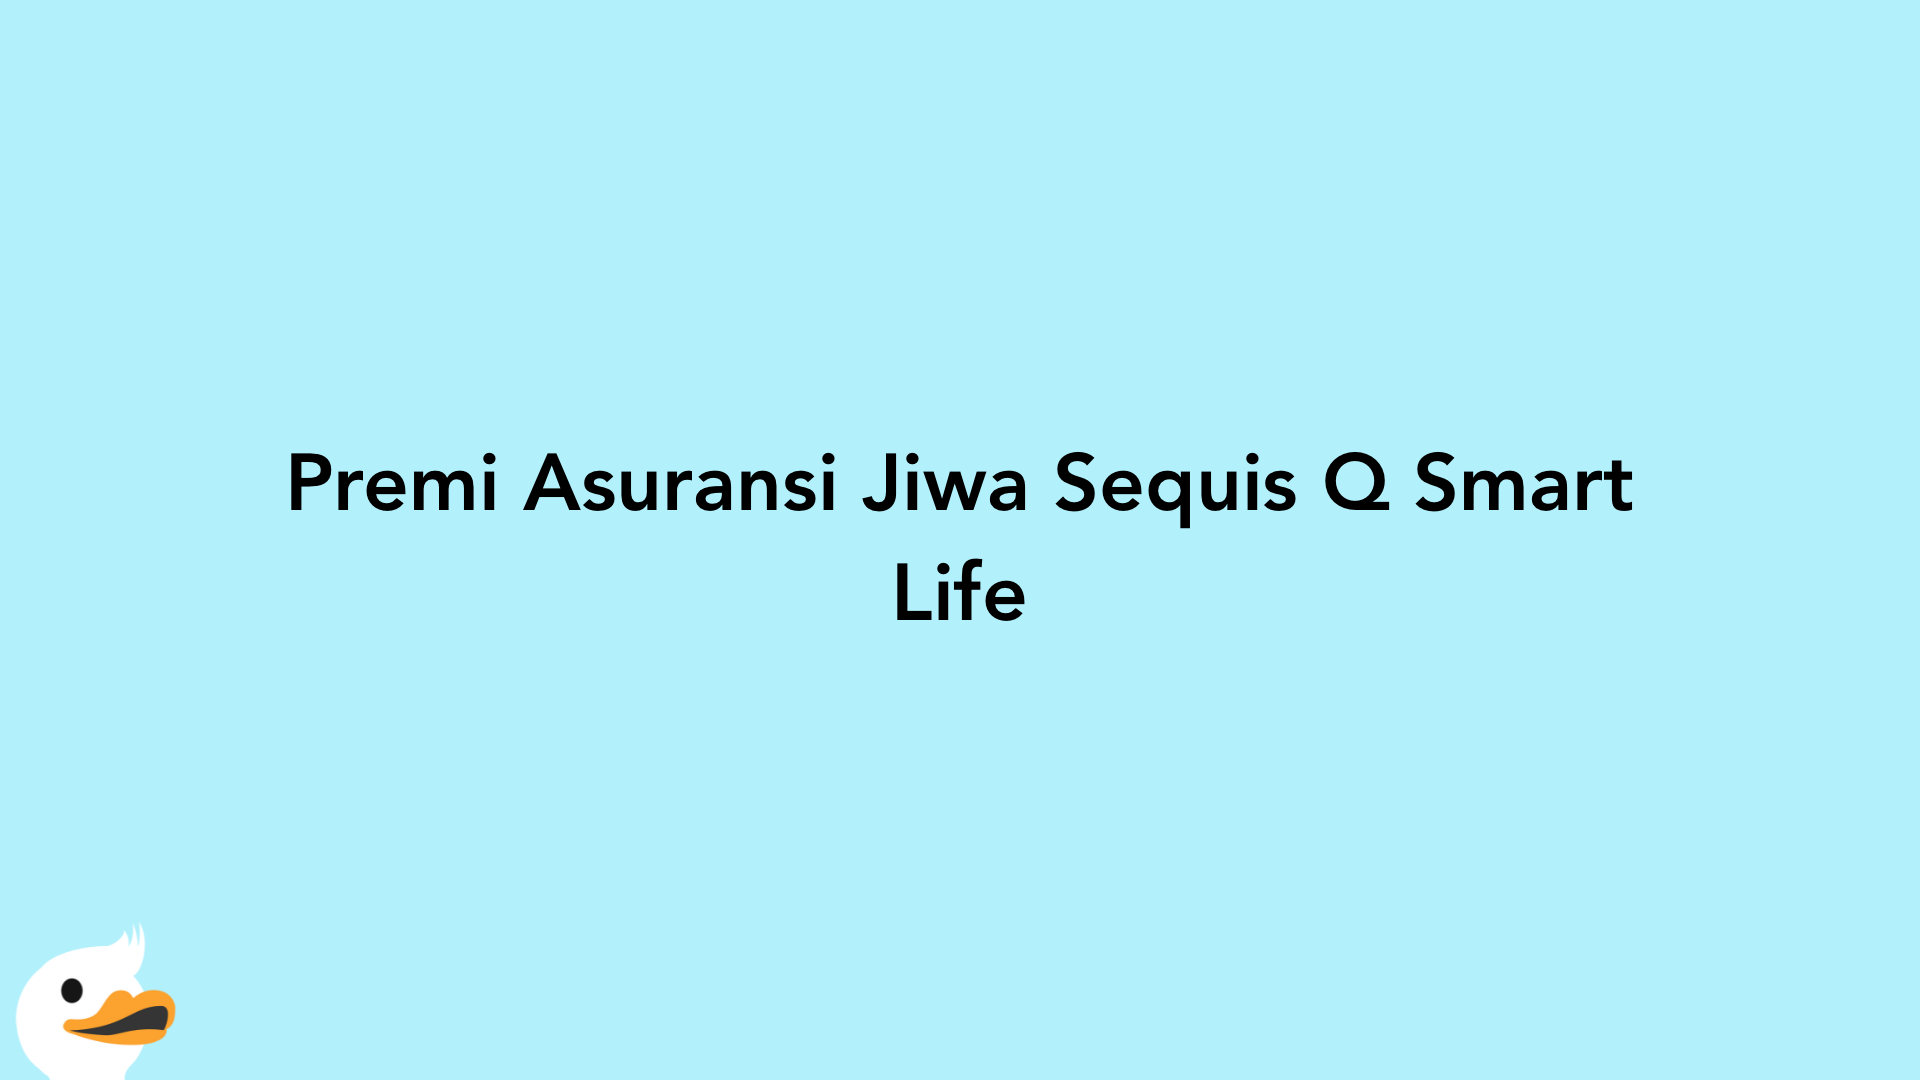 Premi Asuransi Jiwa Sequis Q Smart Life